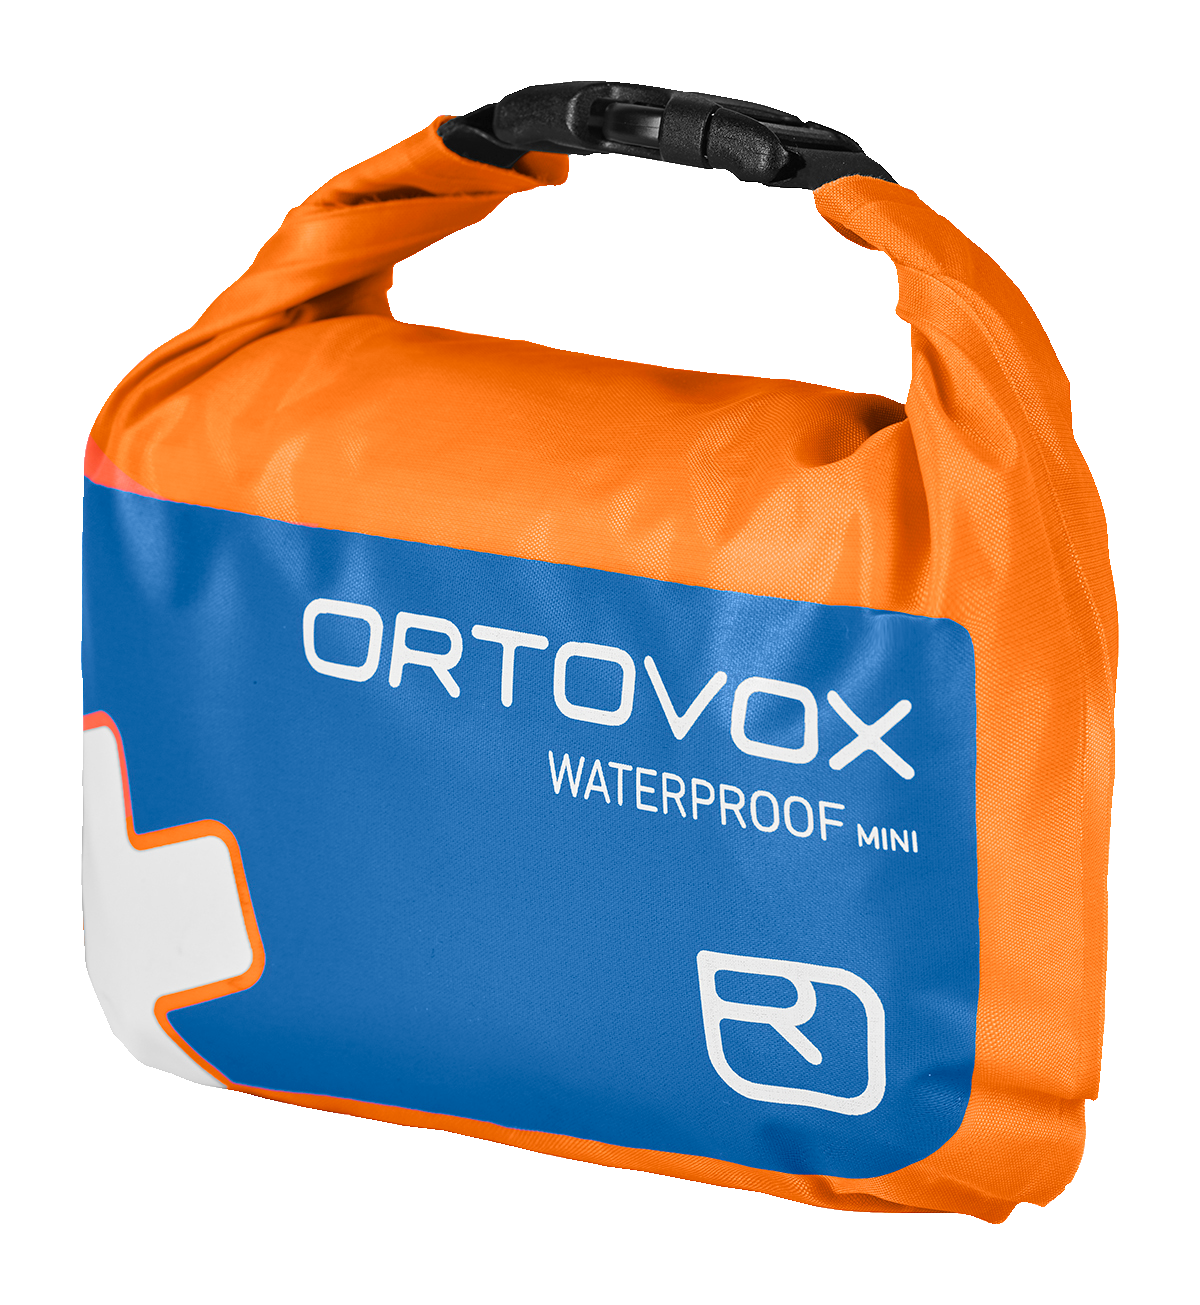 Ortovox First Aid Waterproof Mini - EHBO-set